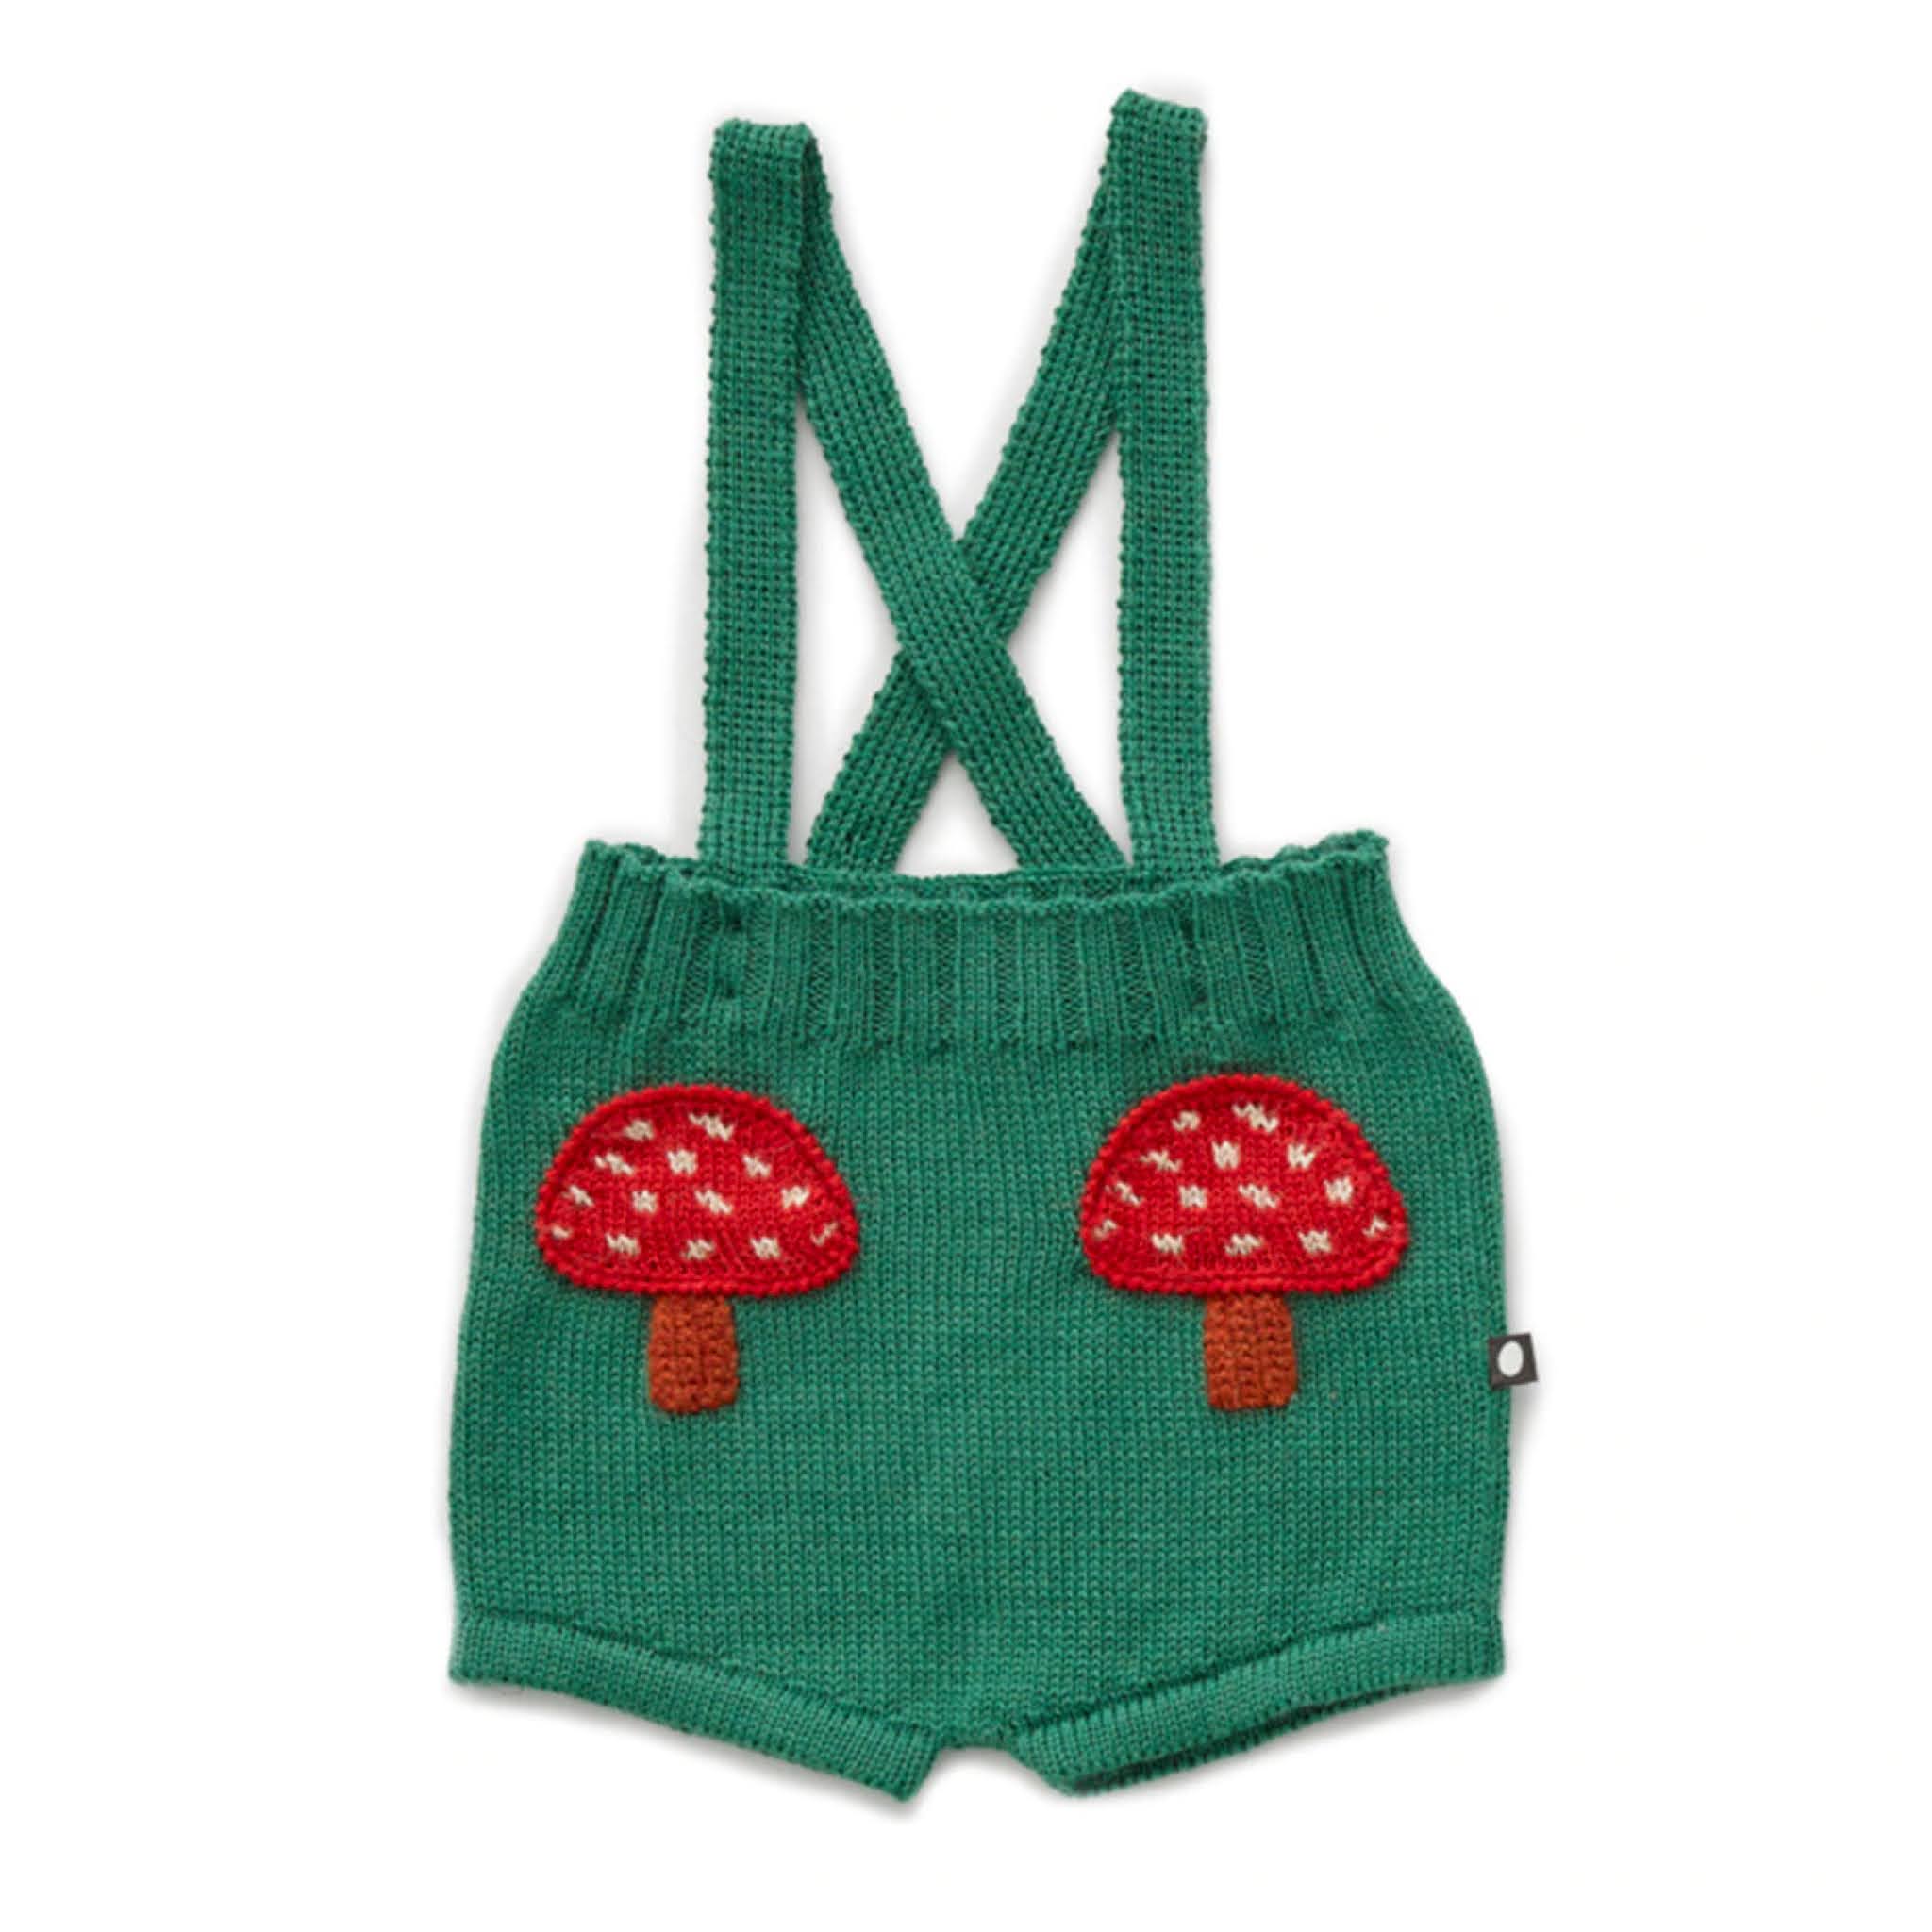 Toddler Mushroom Suspender Shorts from Oeuf